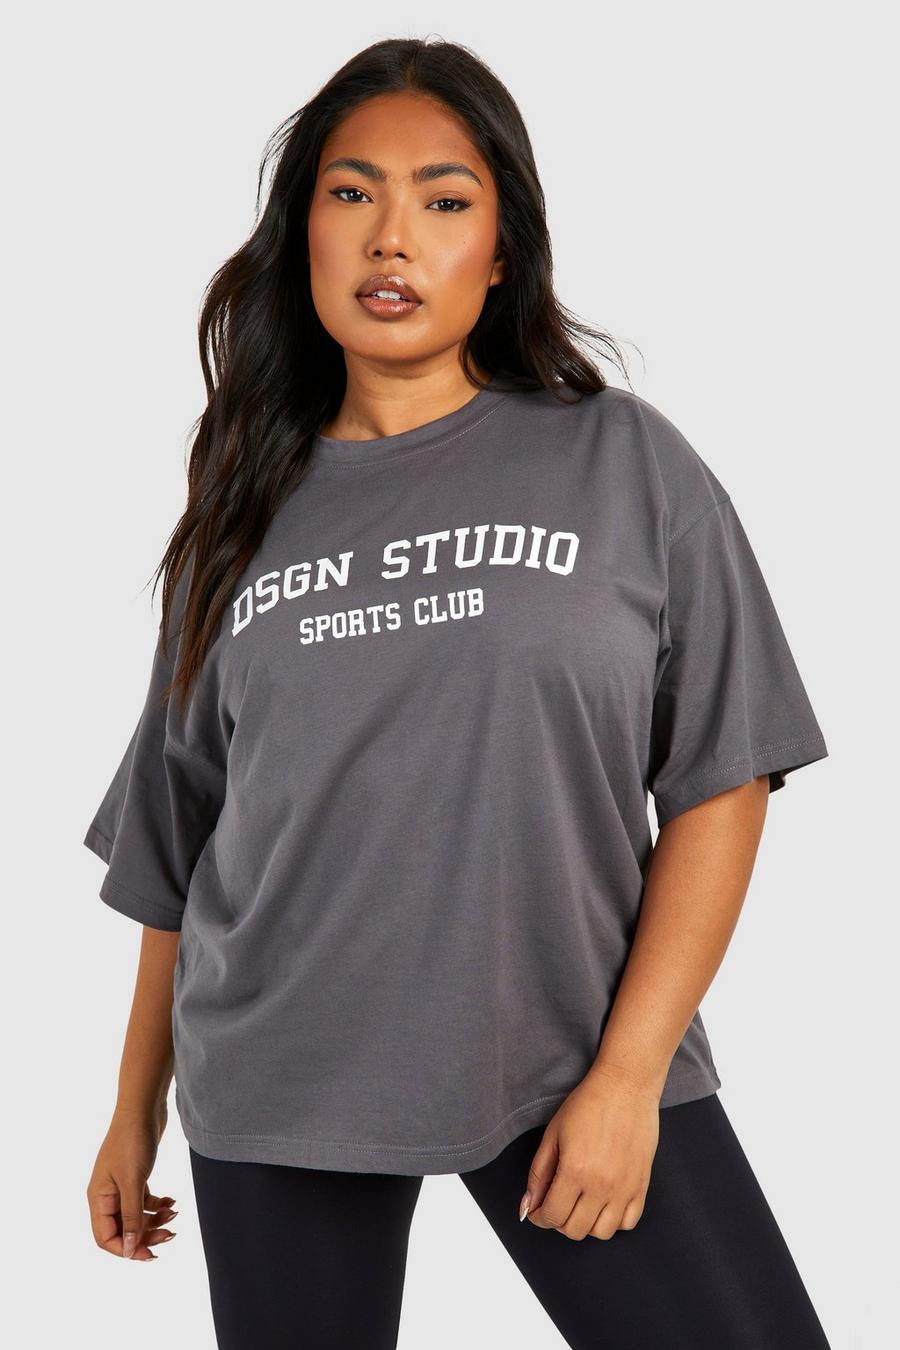 Camiseta Plus oversize con estampado Dsgn Studio Sports Club, Charcoal